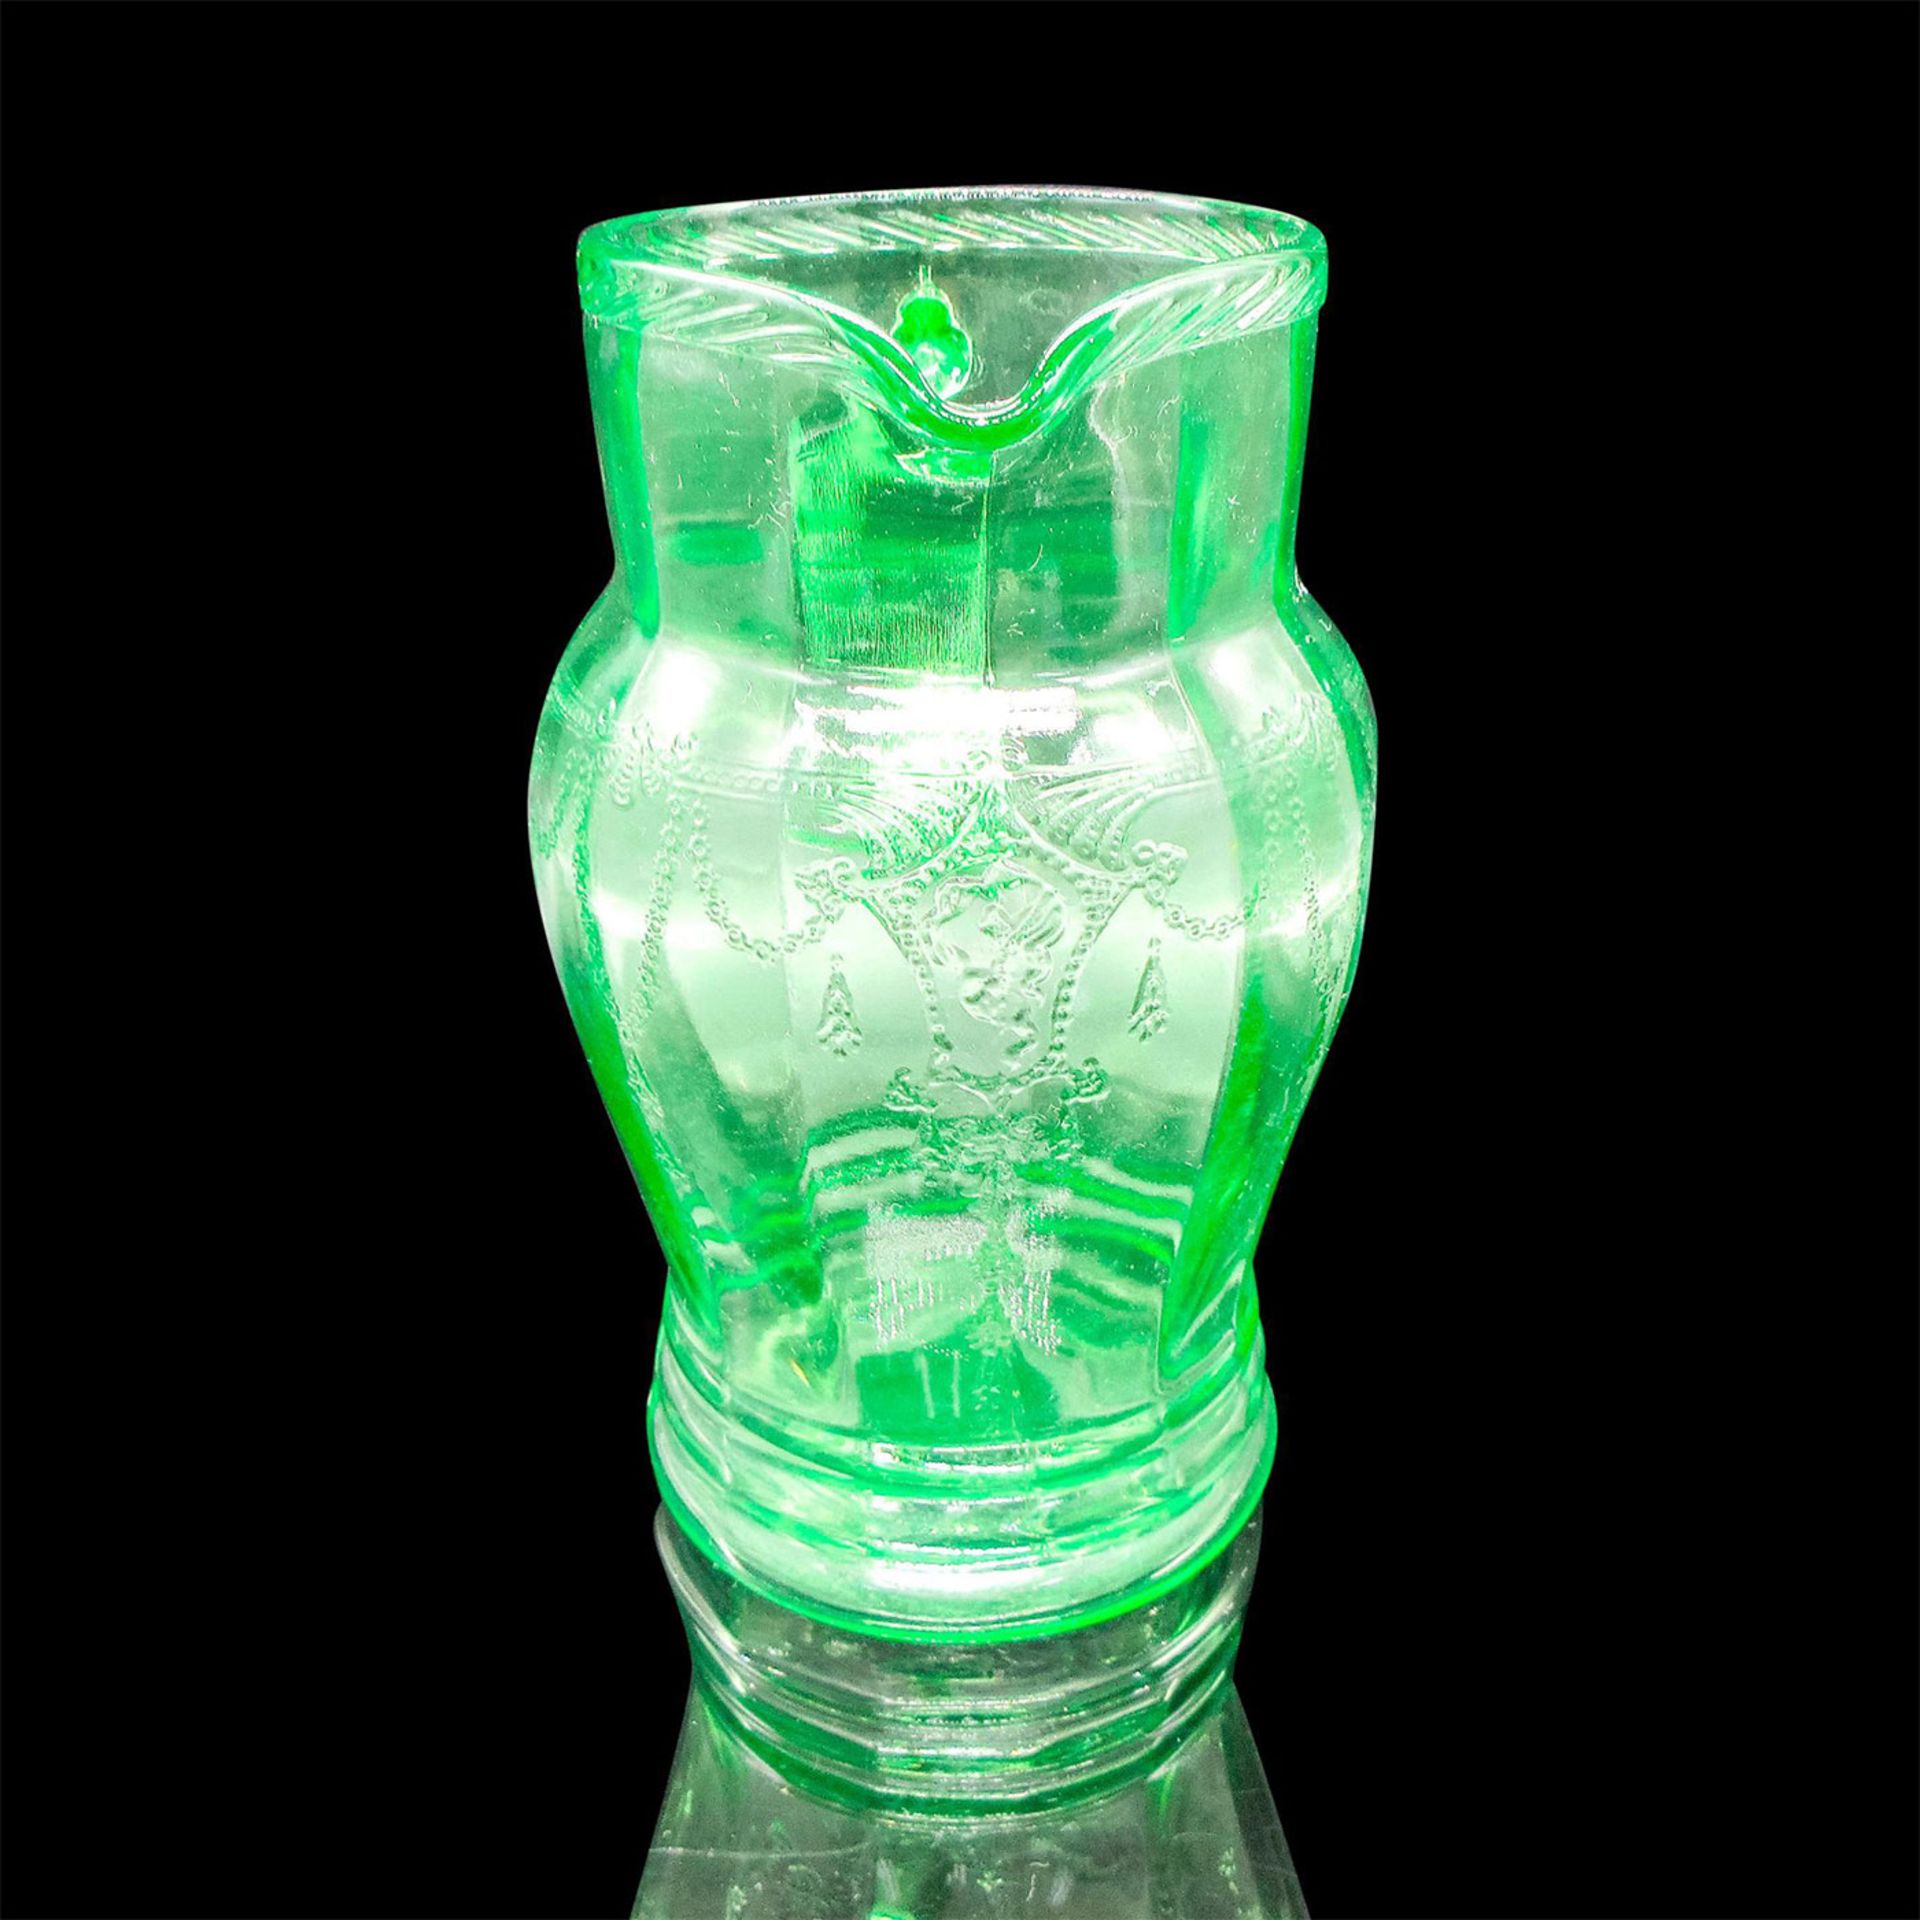 Vintage Green Depression Glass Pitcher - Image 2 of 3